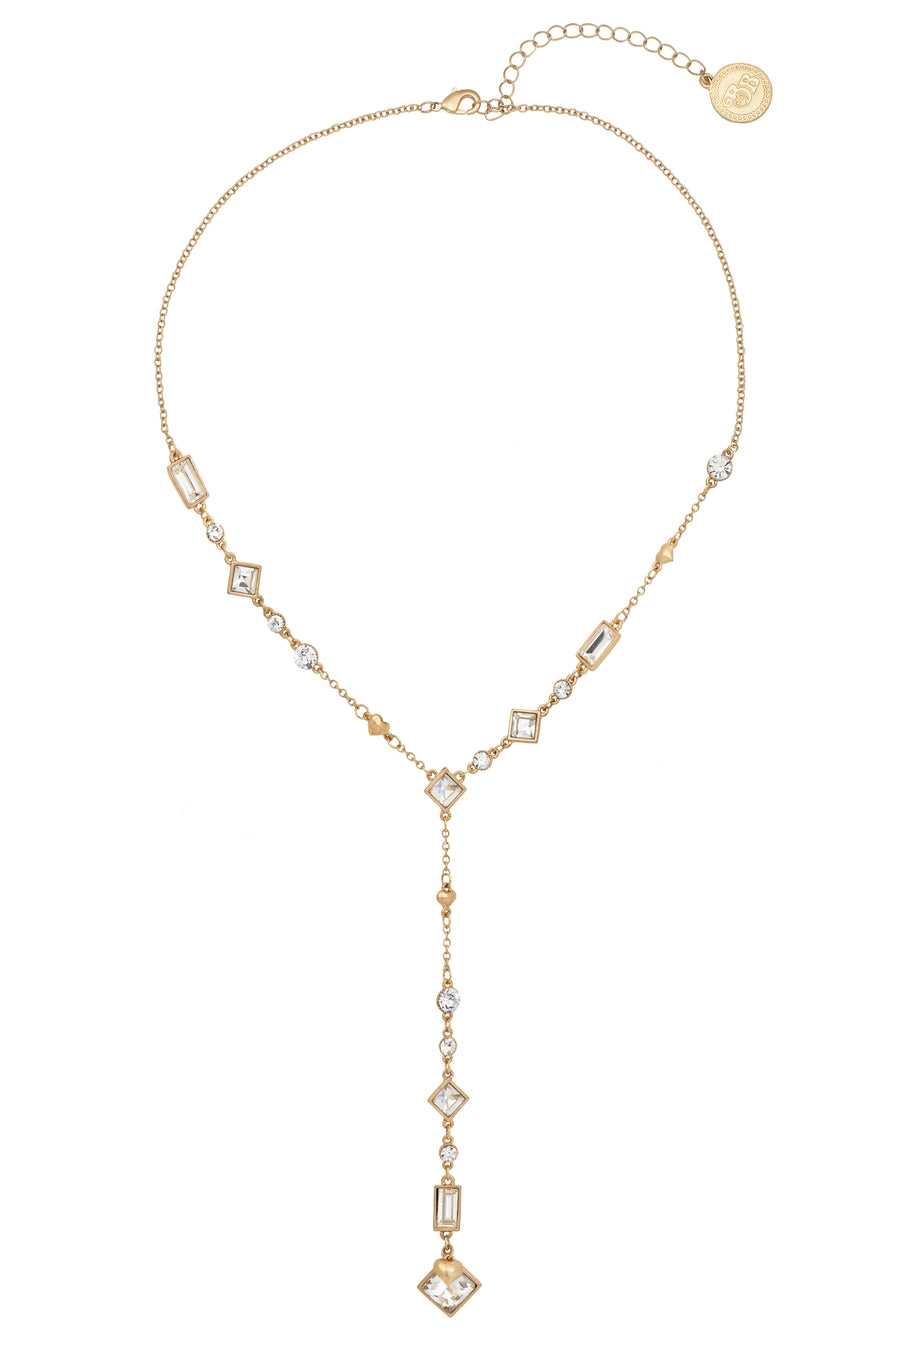 Bibi Bijoux Gold Vintage Crystal Necklace